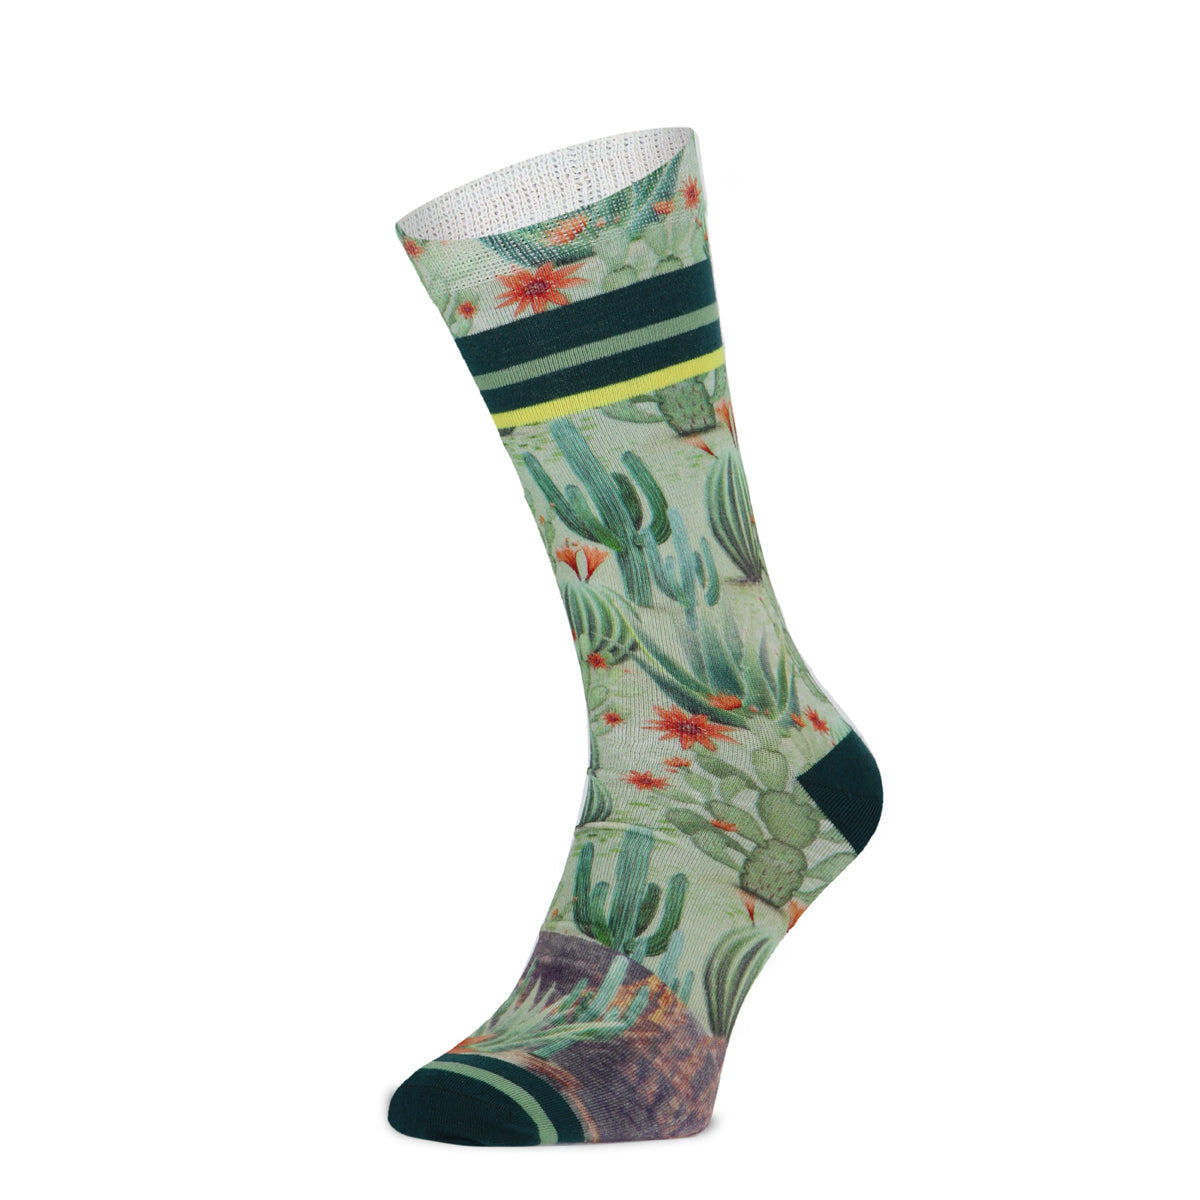 Xpooos & ADNF Cactus Bamboo men's socks